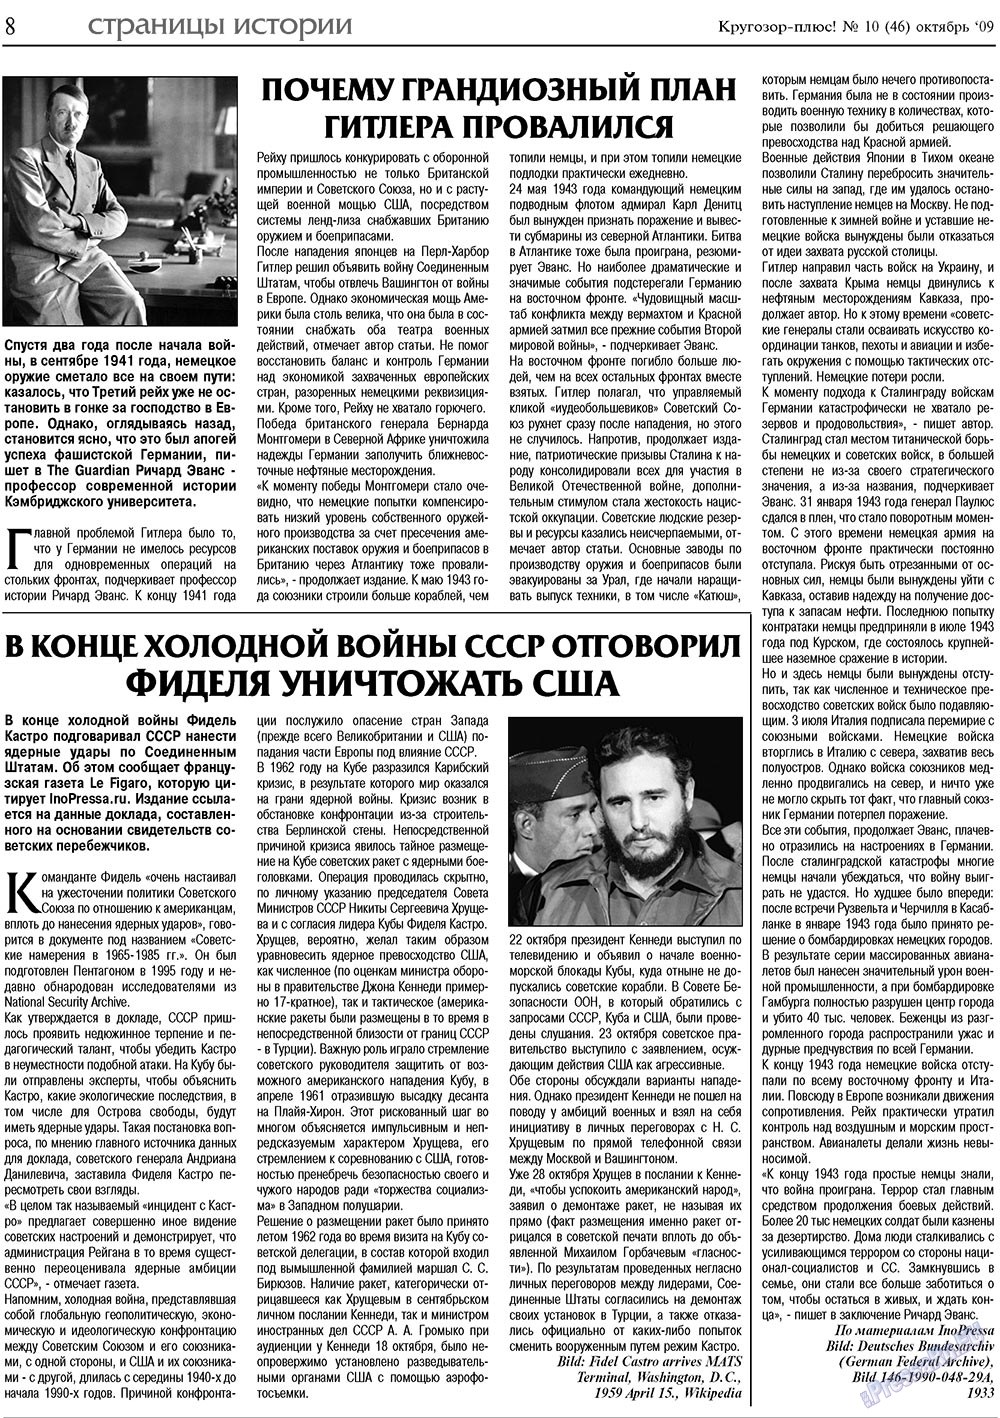 Кругозор плюс! (газета). 2009 год, номер 10, стр. 8